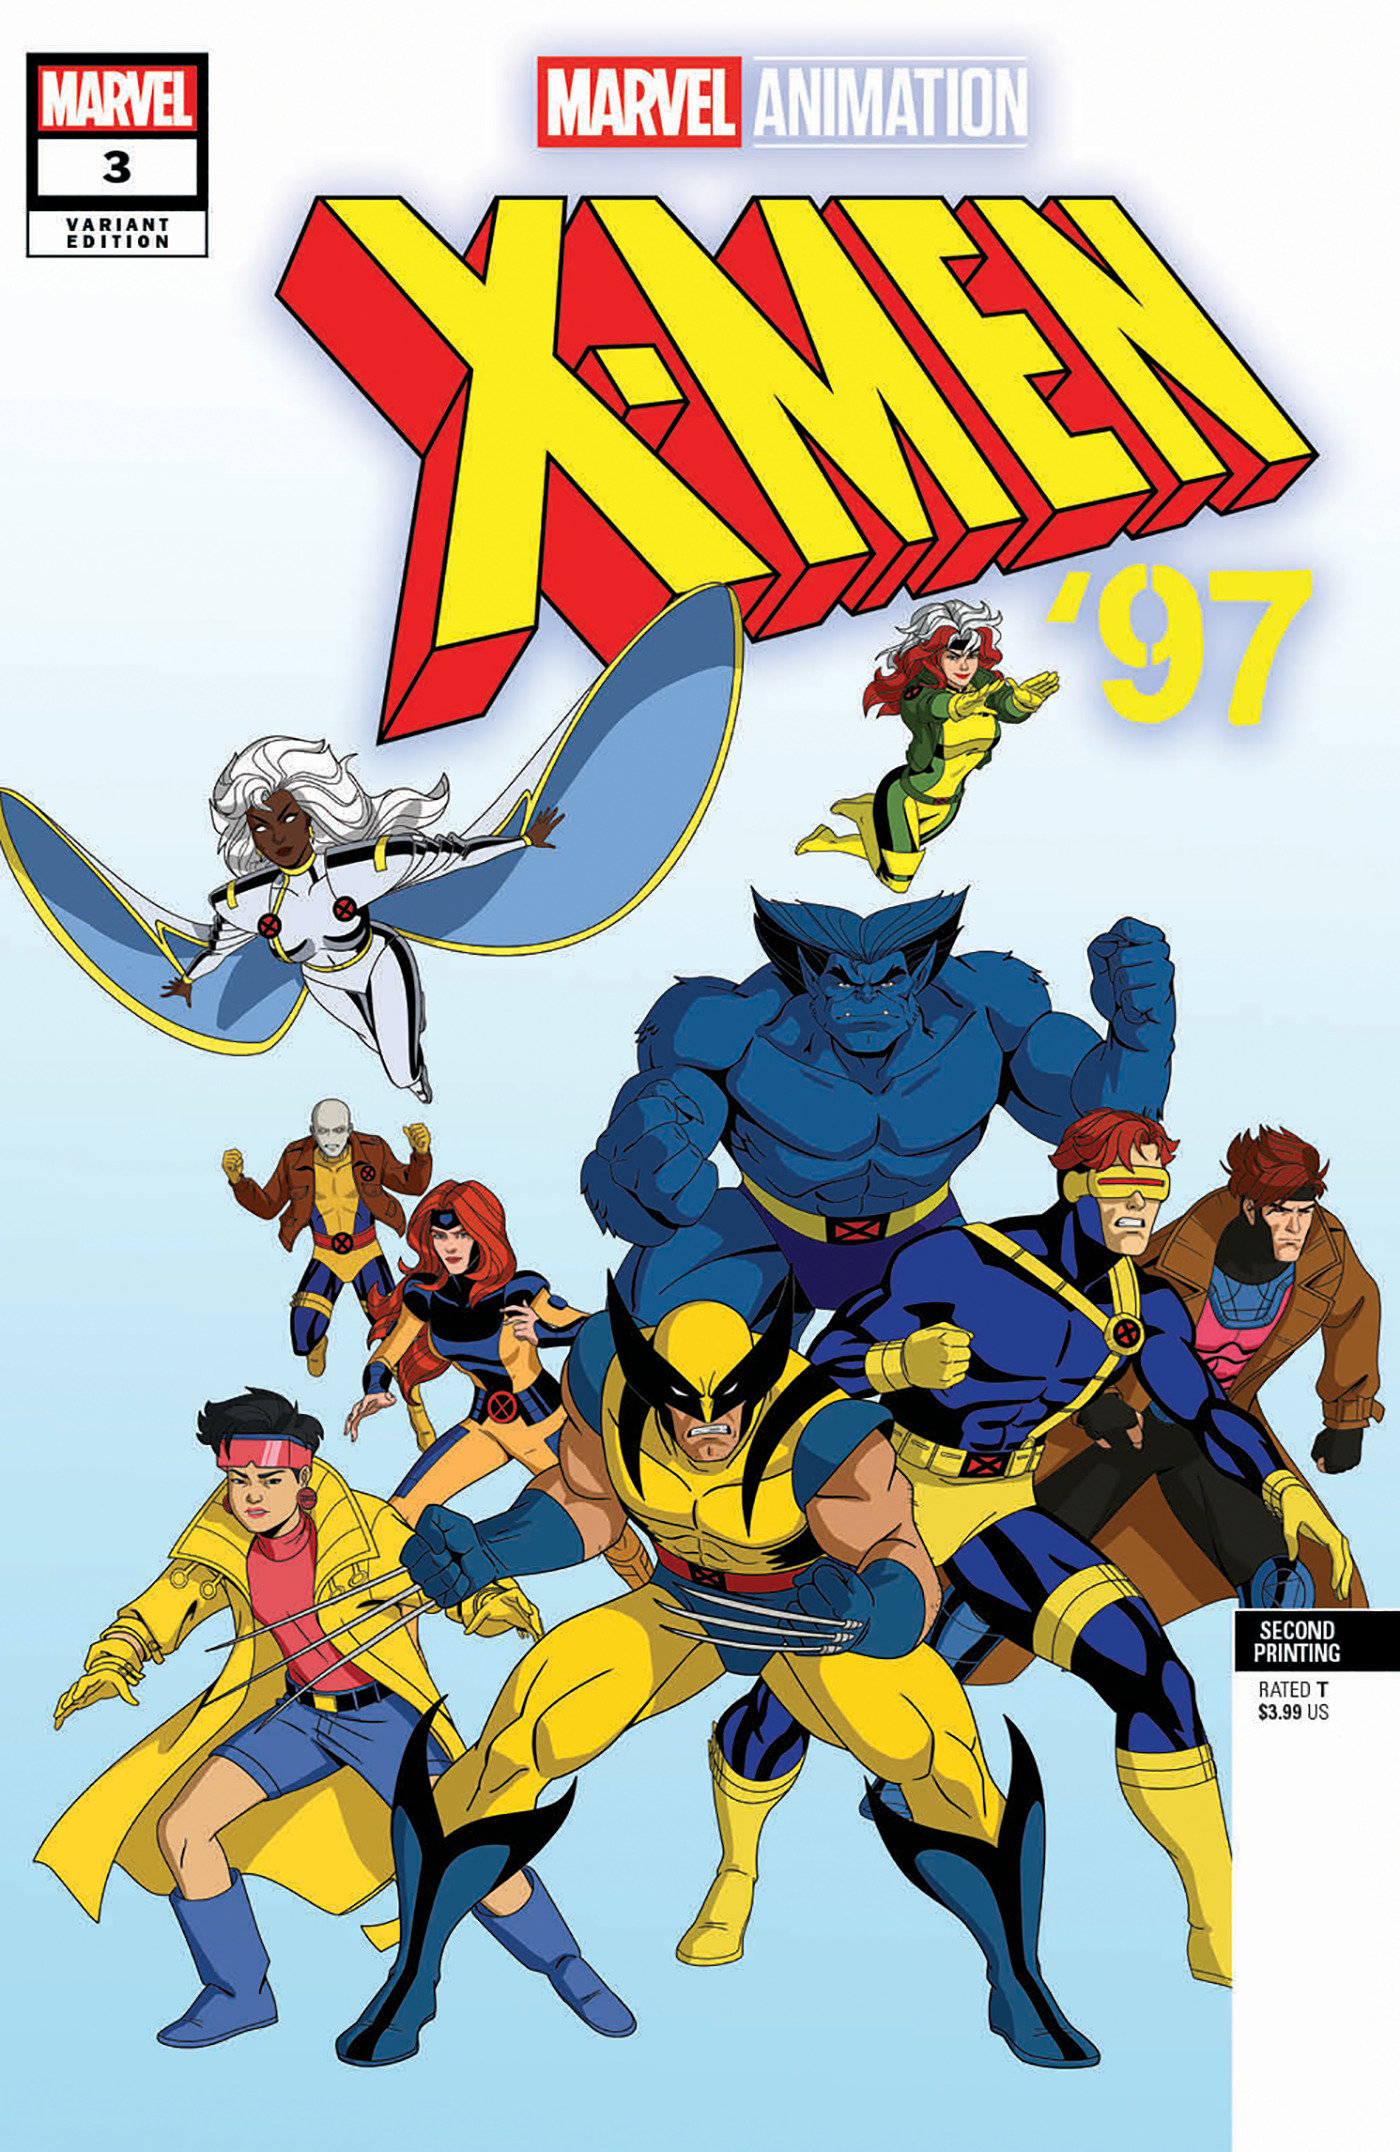 X-Men '97 #3 2nd Printing Marvel Animation Variant